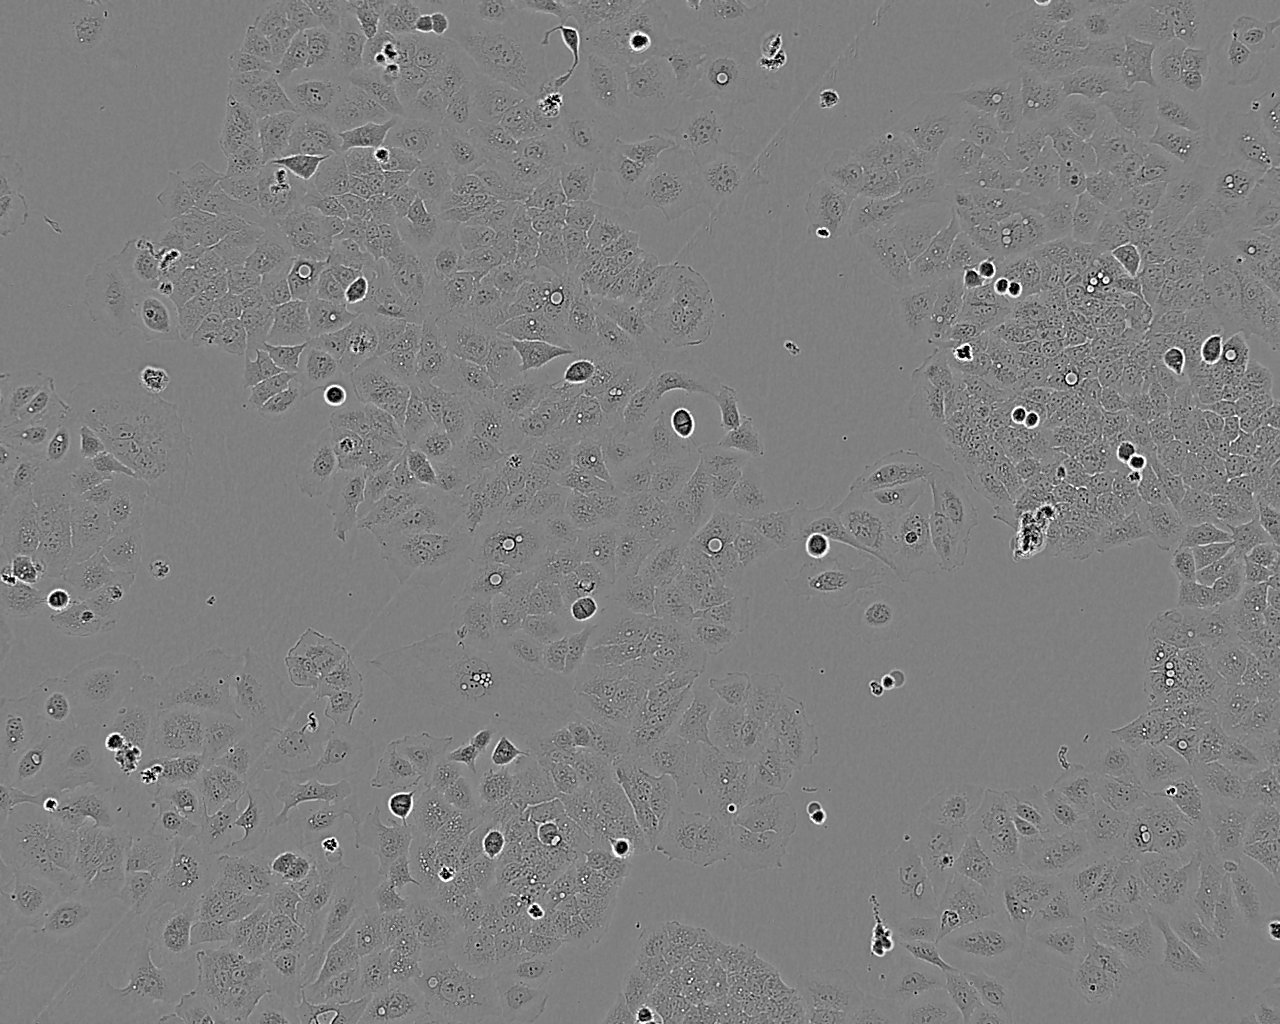 SNU-668 Cell:人胃癌细胞系